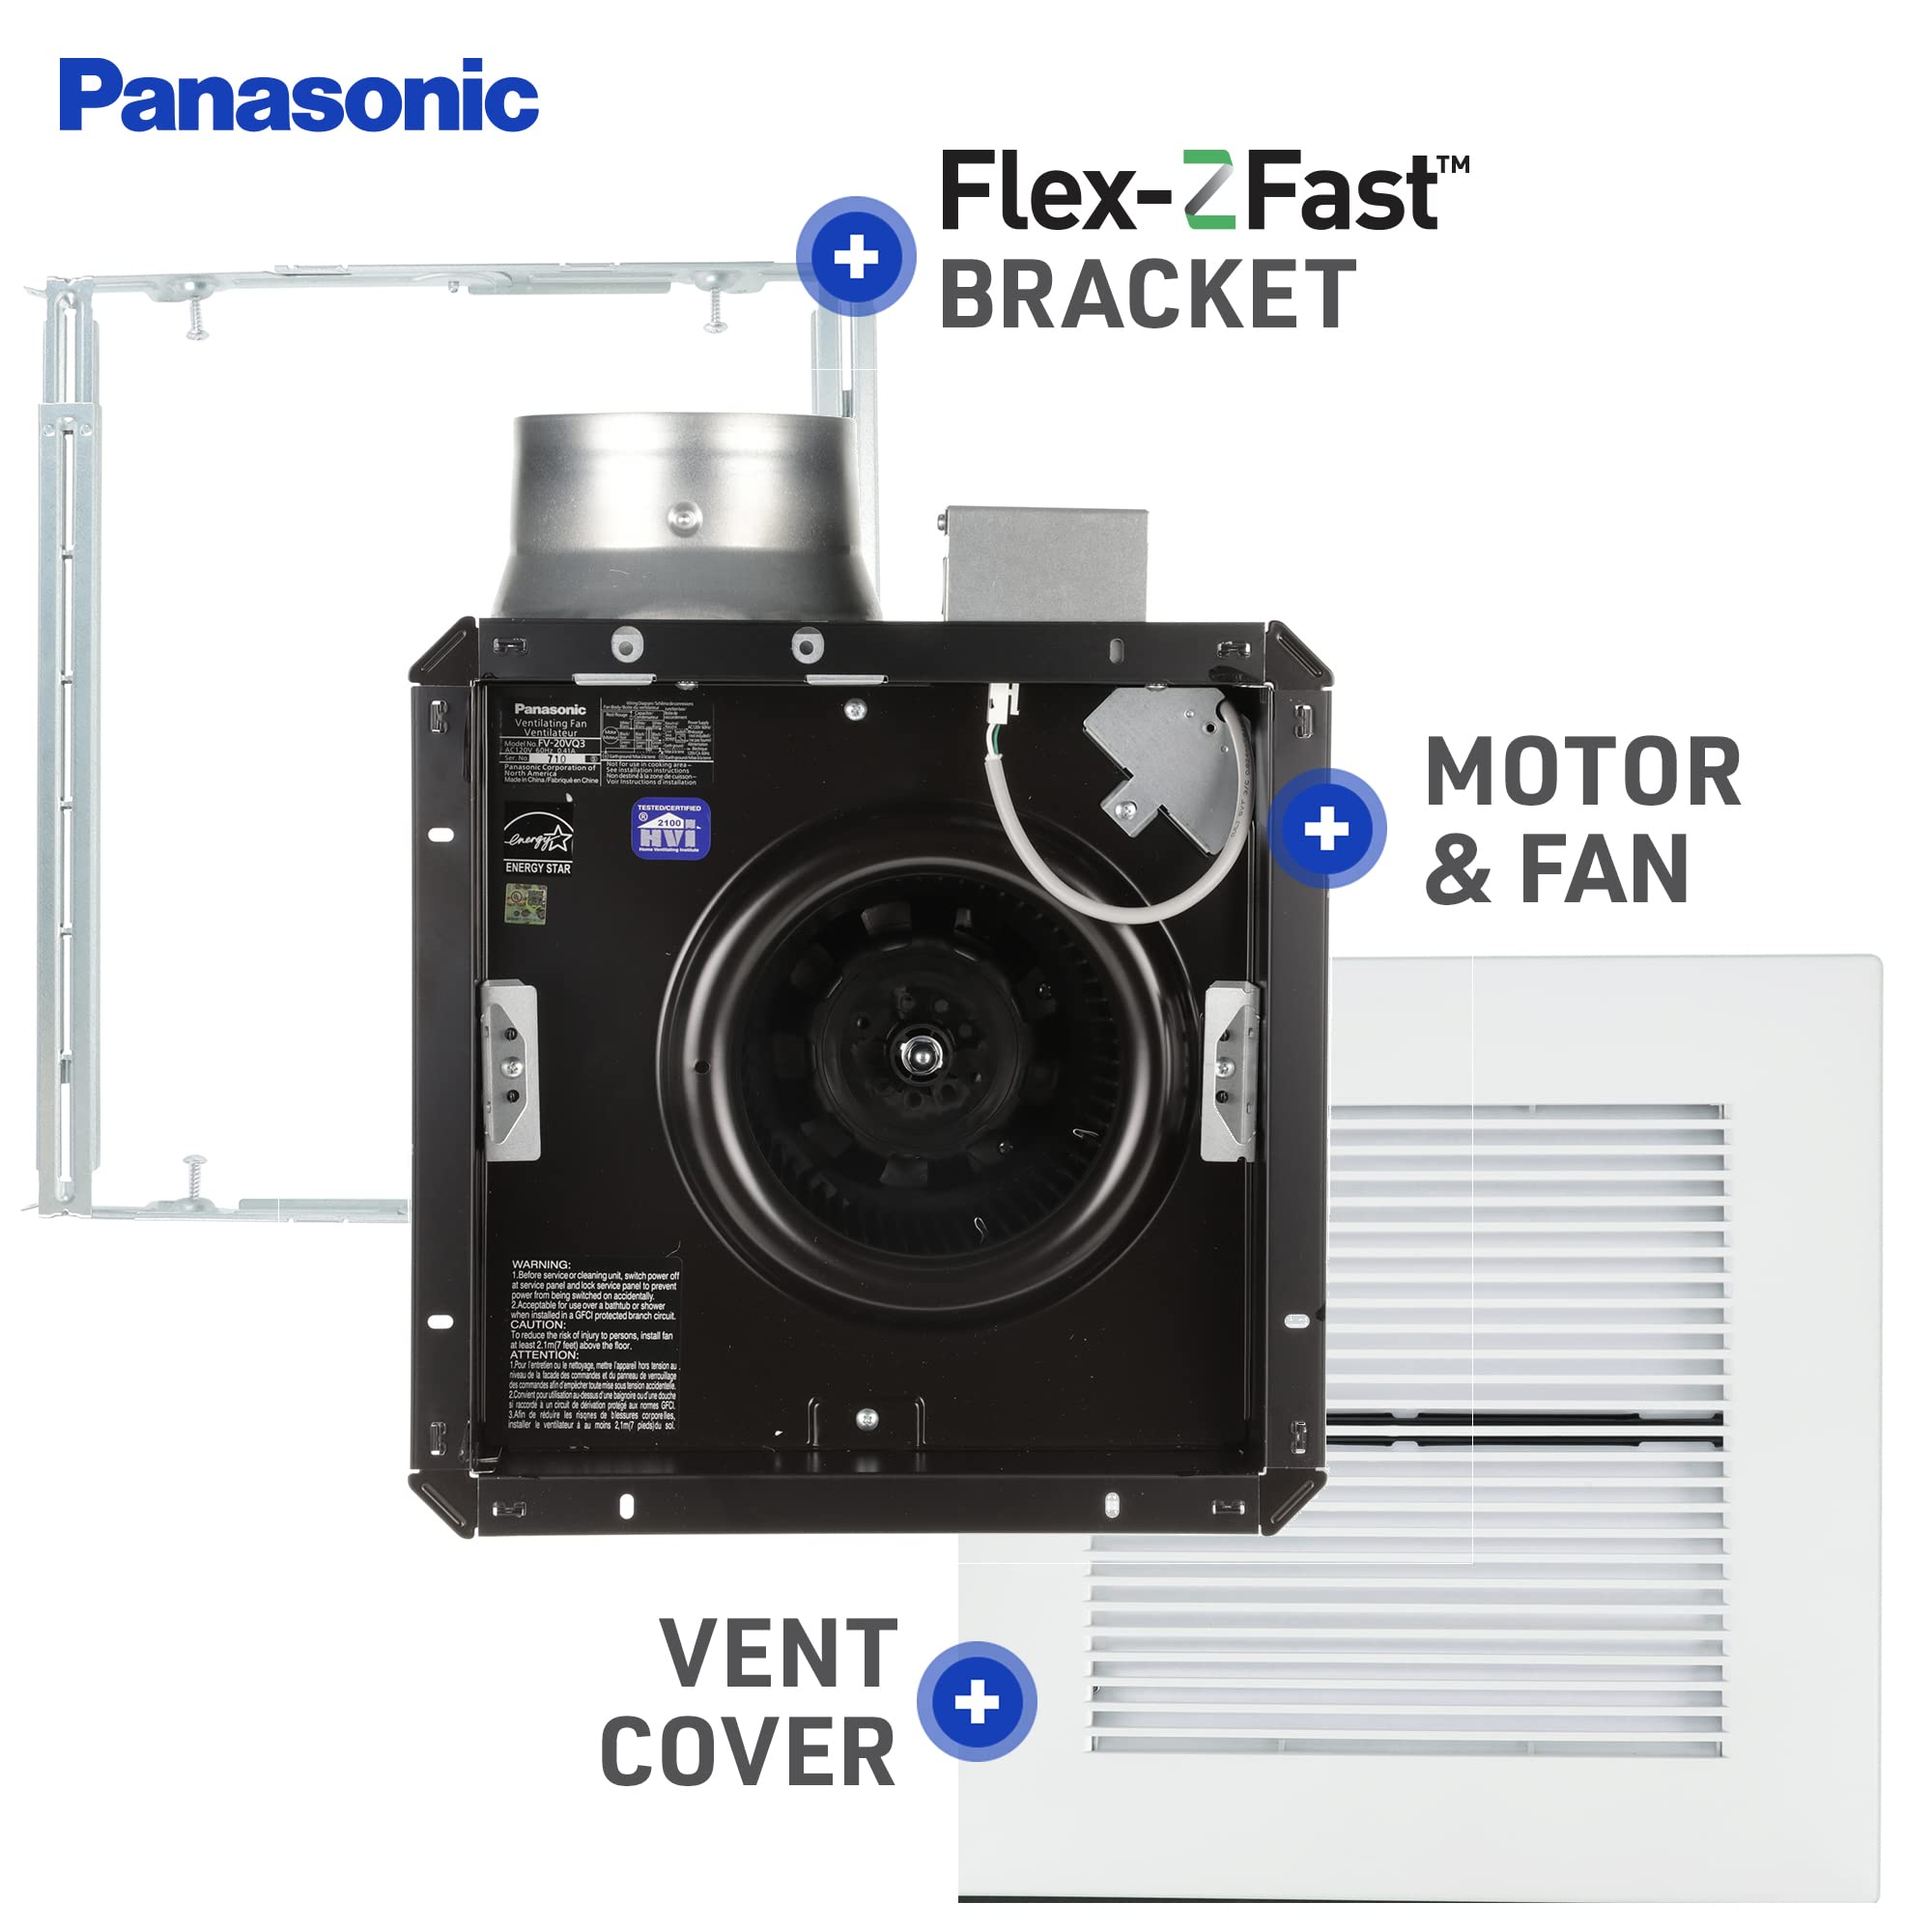 Panasonic FV-20VQ3 WhisperCeiling Spot Ventilation Fan - 190 CFM - Quiet Ceiling Mount Bathroom Fan